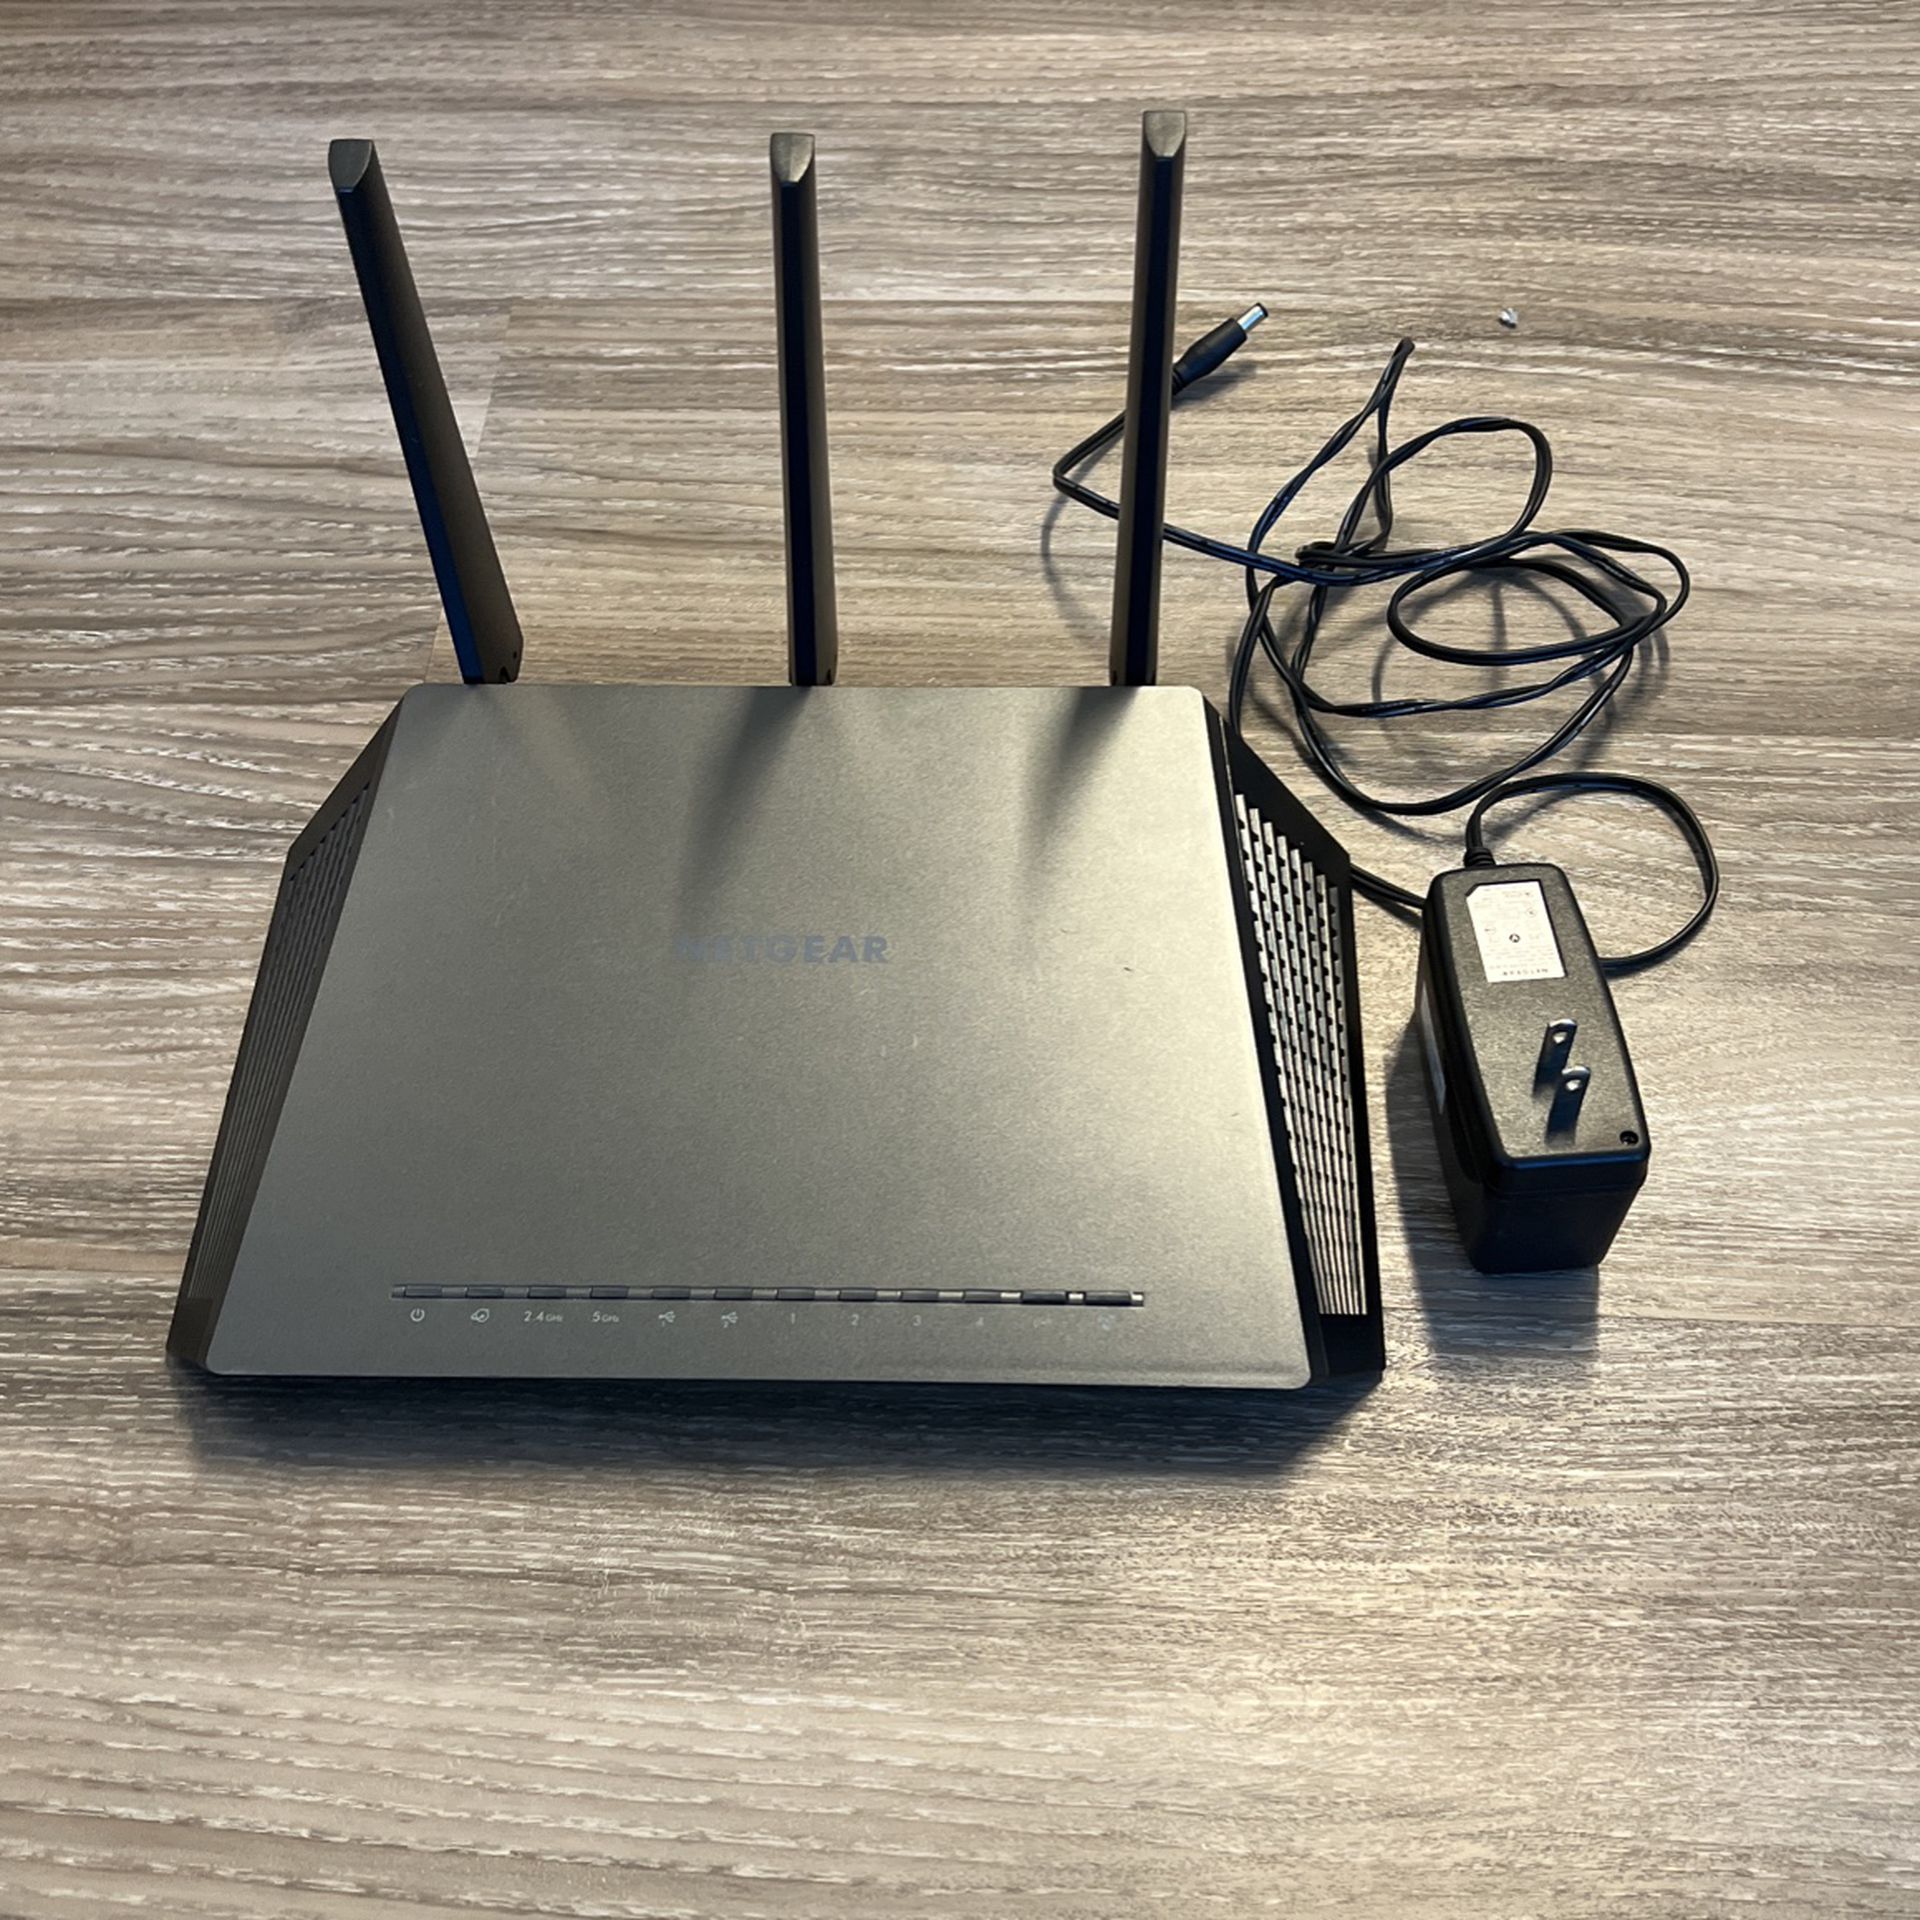 NETGEAR Nighthawk R7000 AC1900 Smart WiFi Router 1Gbps USB 3.0